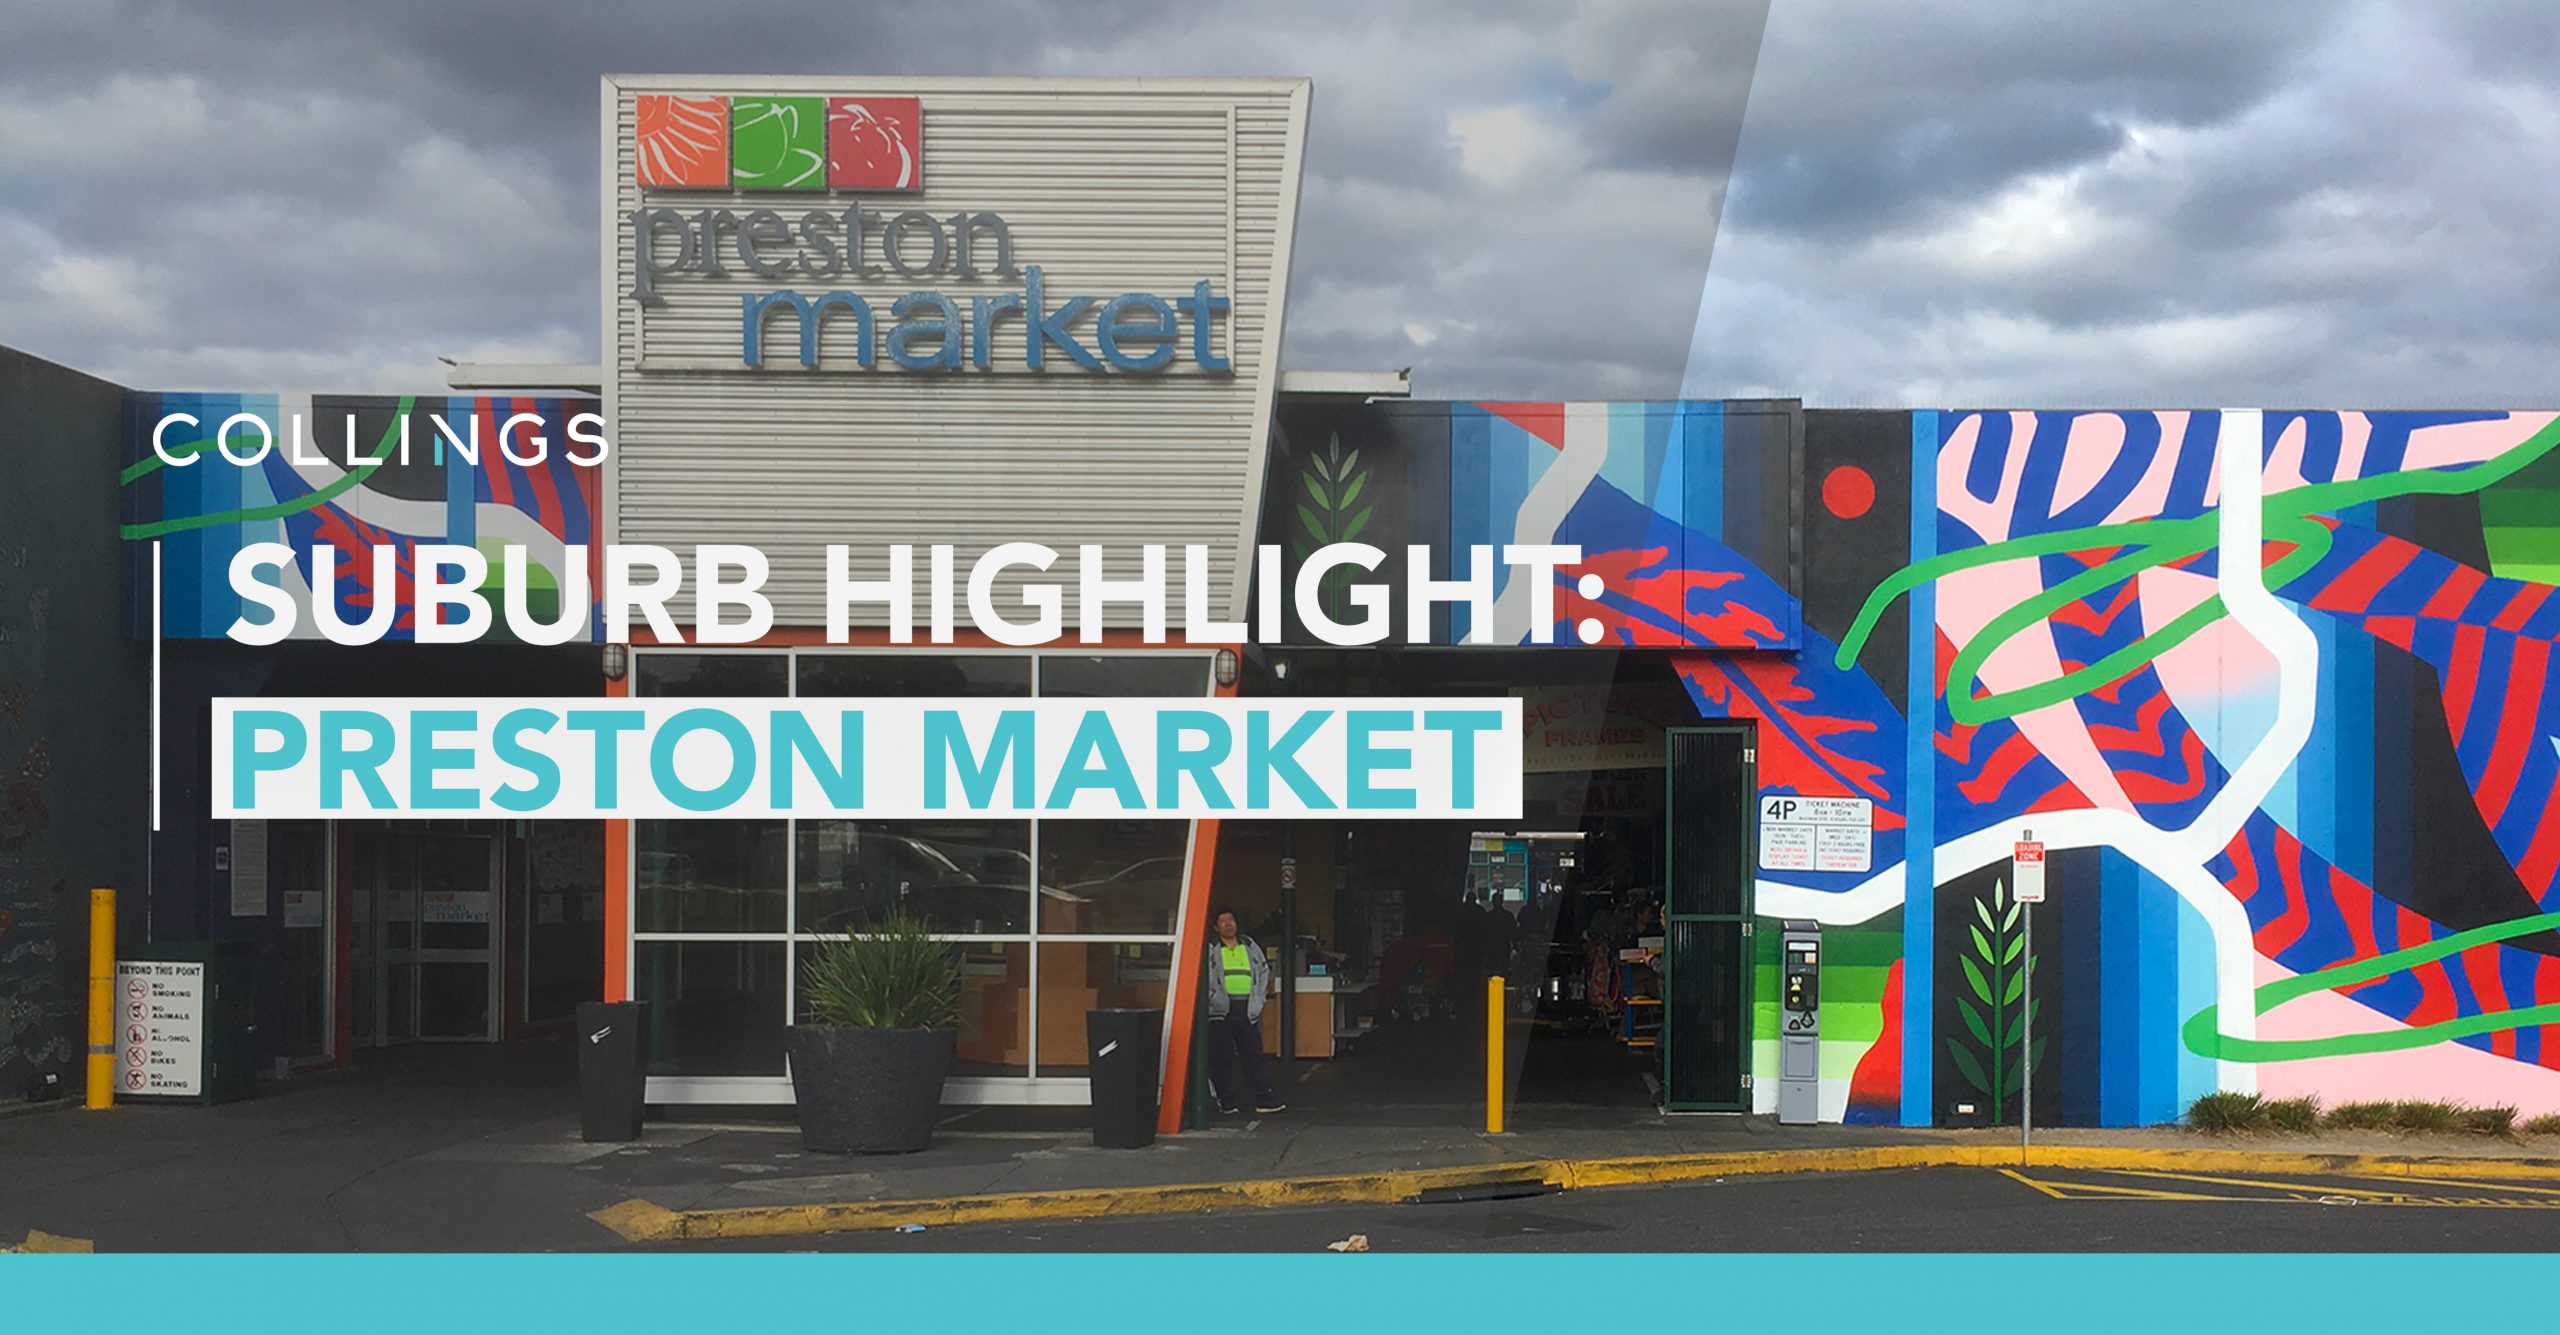 Suburb highlight: Preston Market